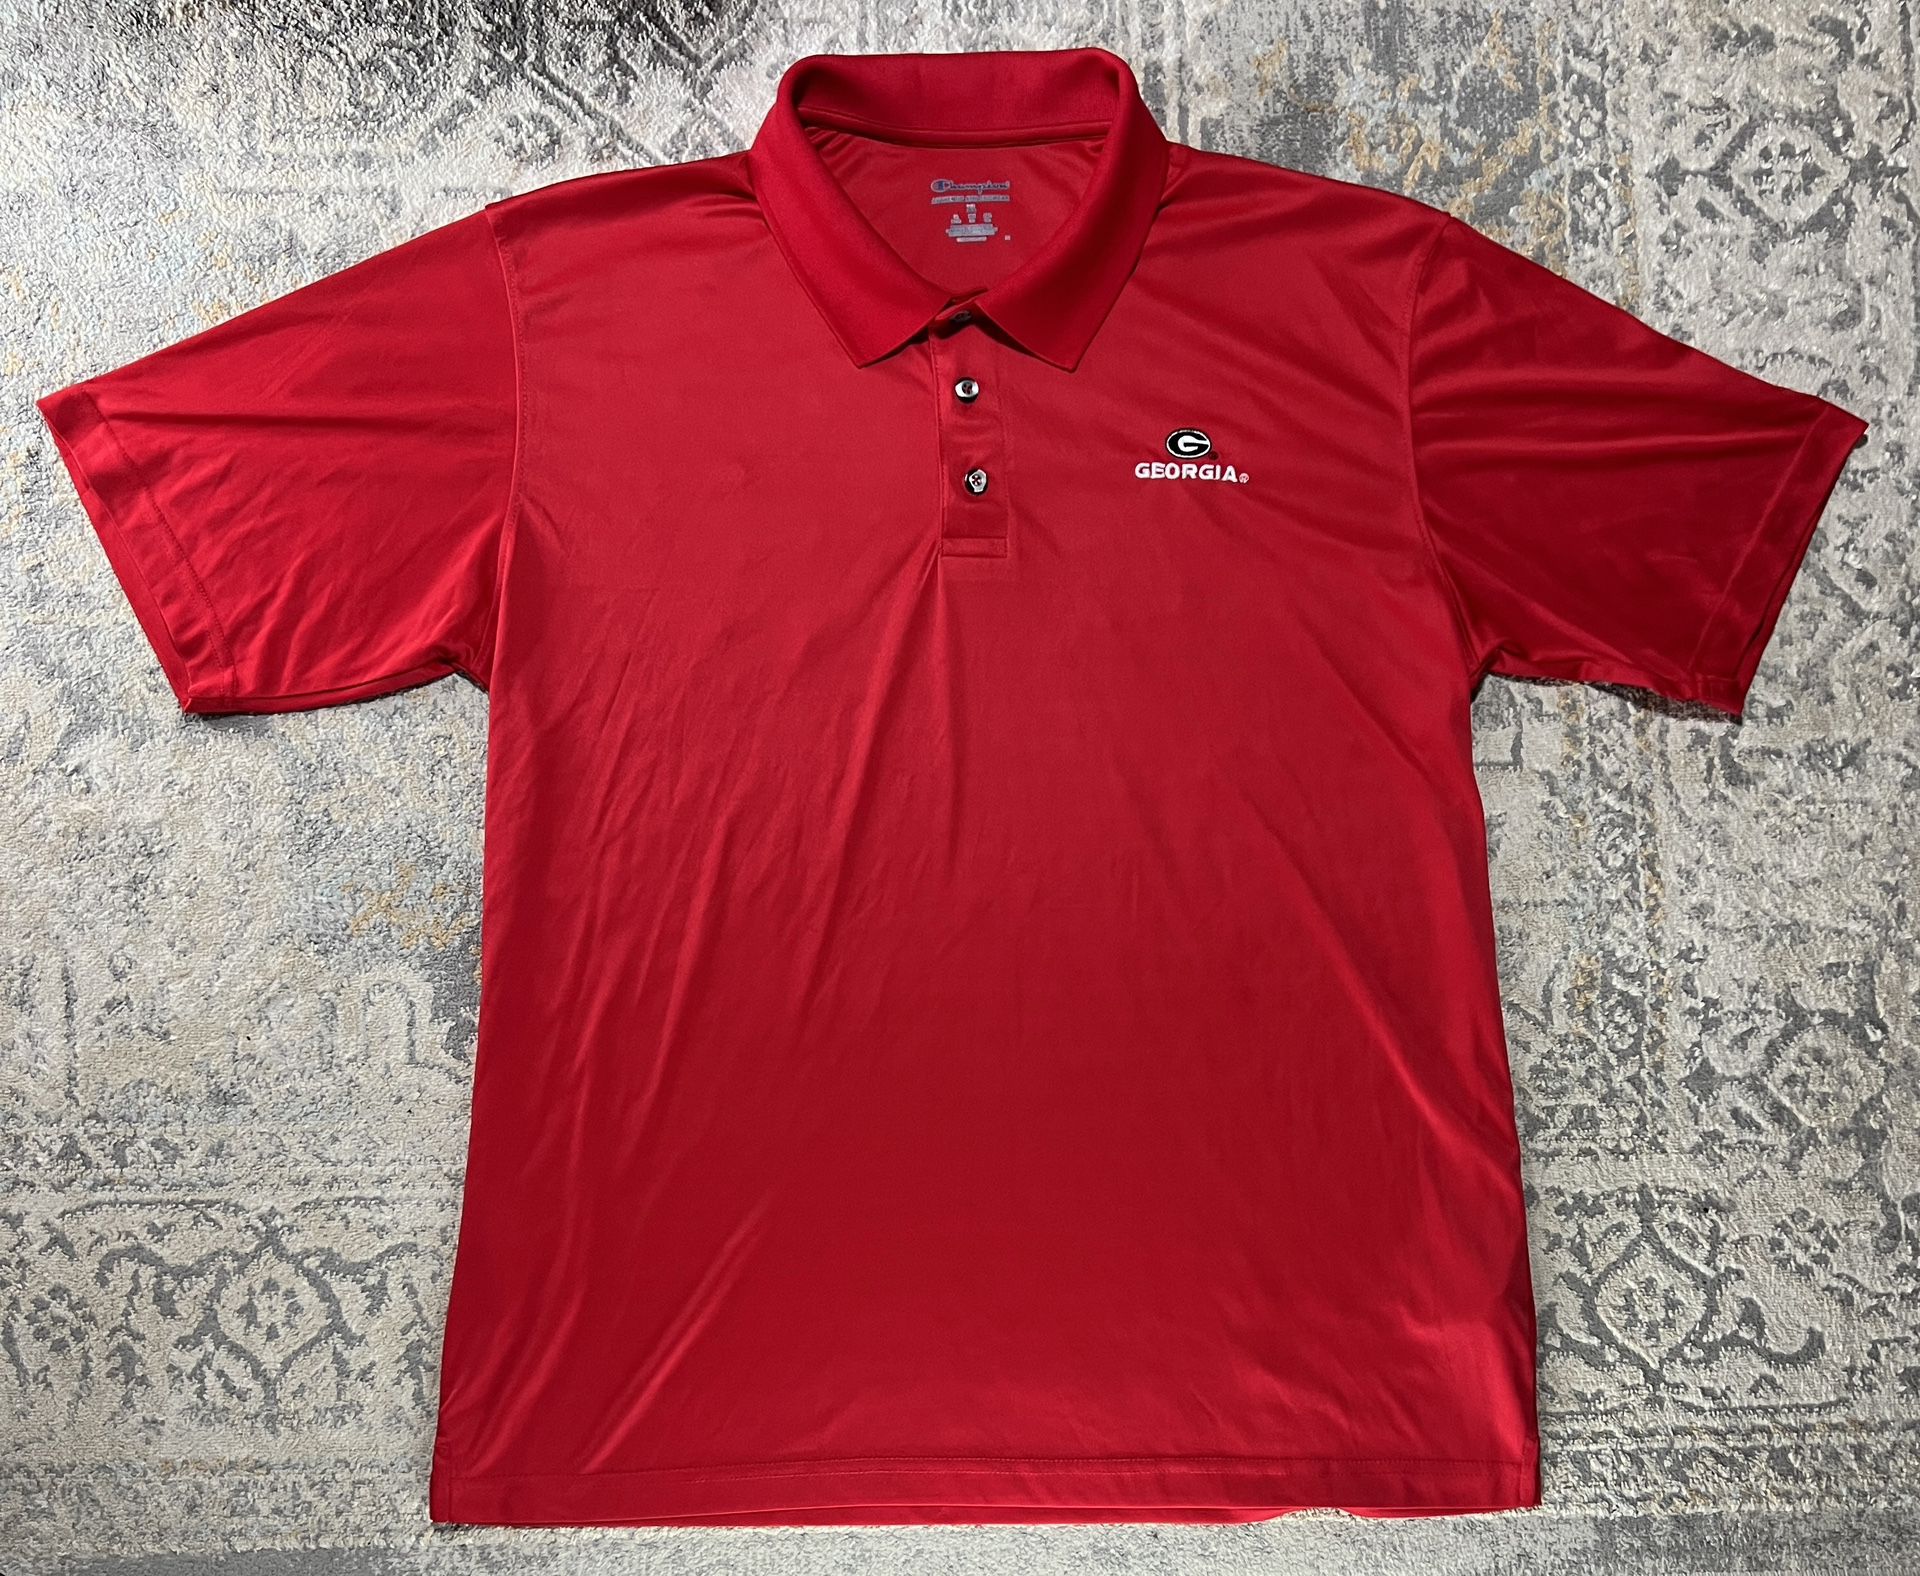 Georgia Bulldogs Polo Shirt Men's XL Red Short Sleeve Champion UGA Dawgs Golf  